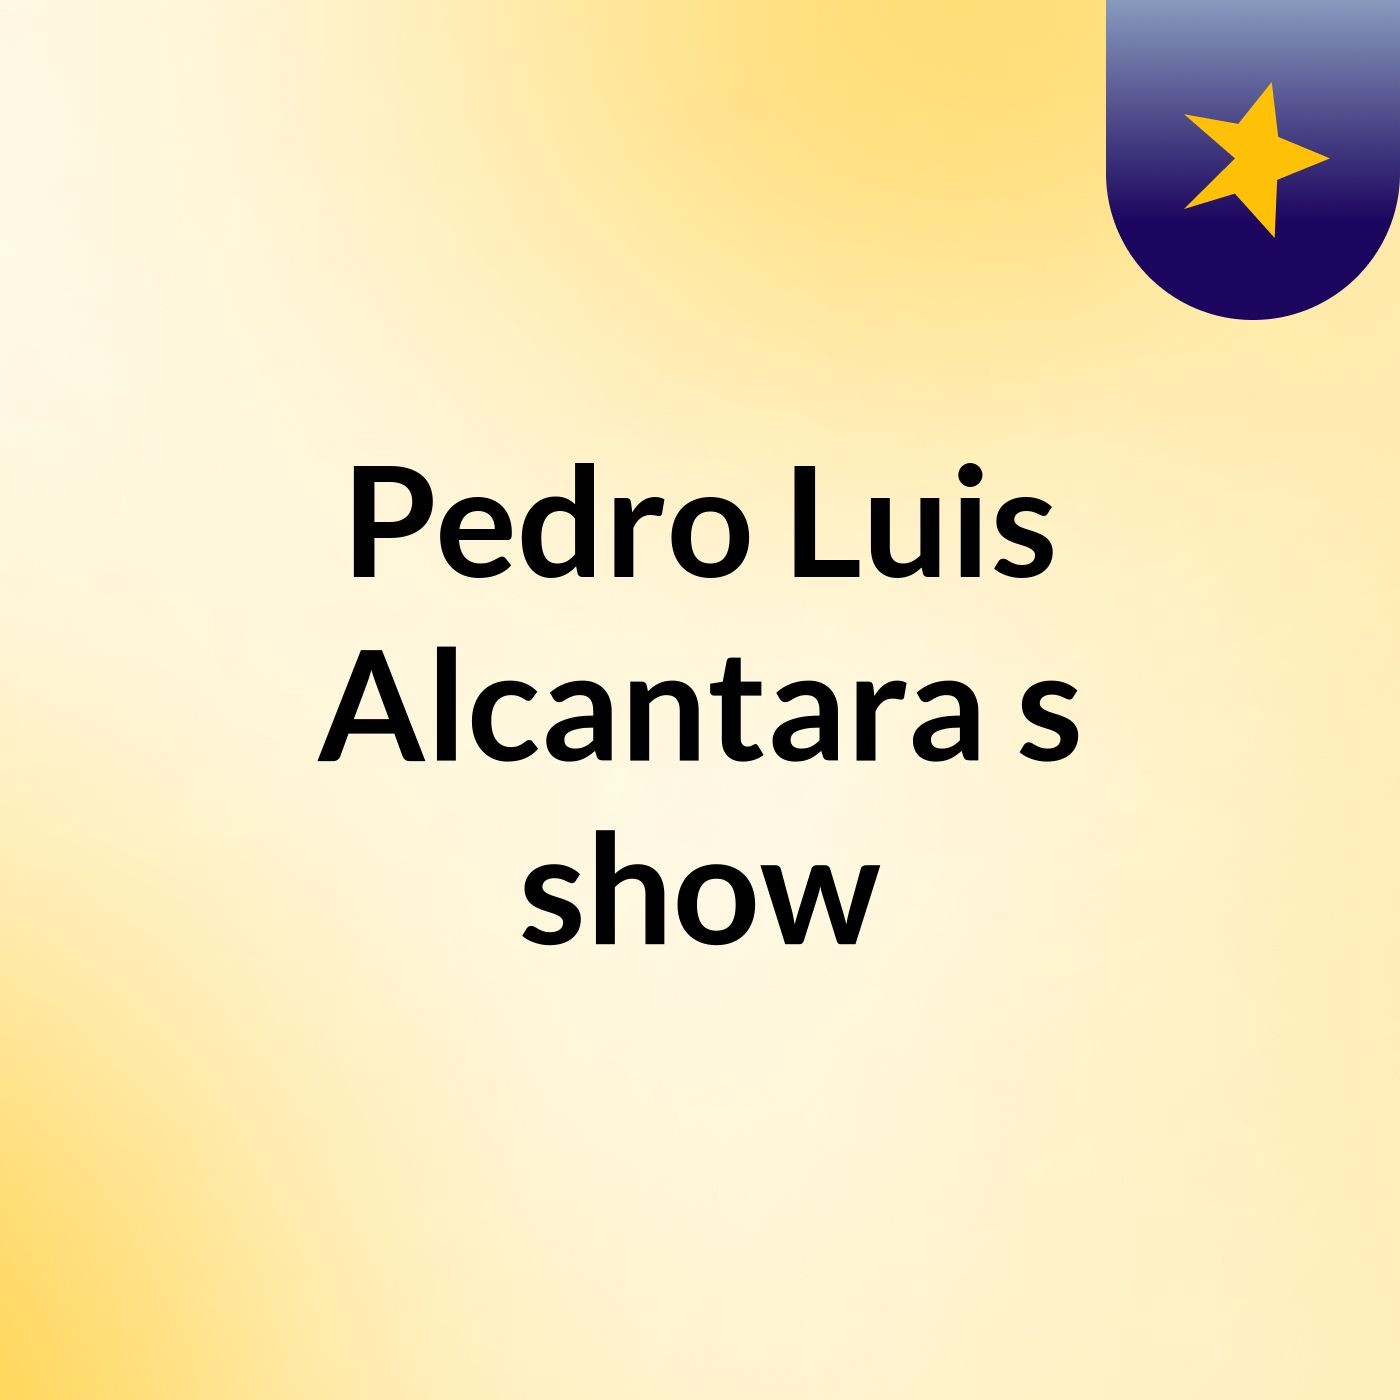 Pedro Luis Alcantara's show